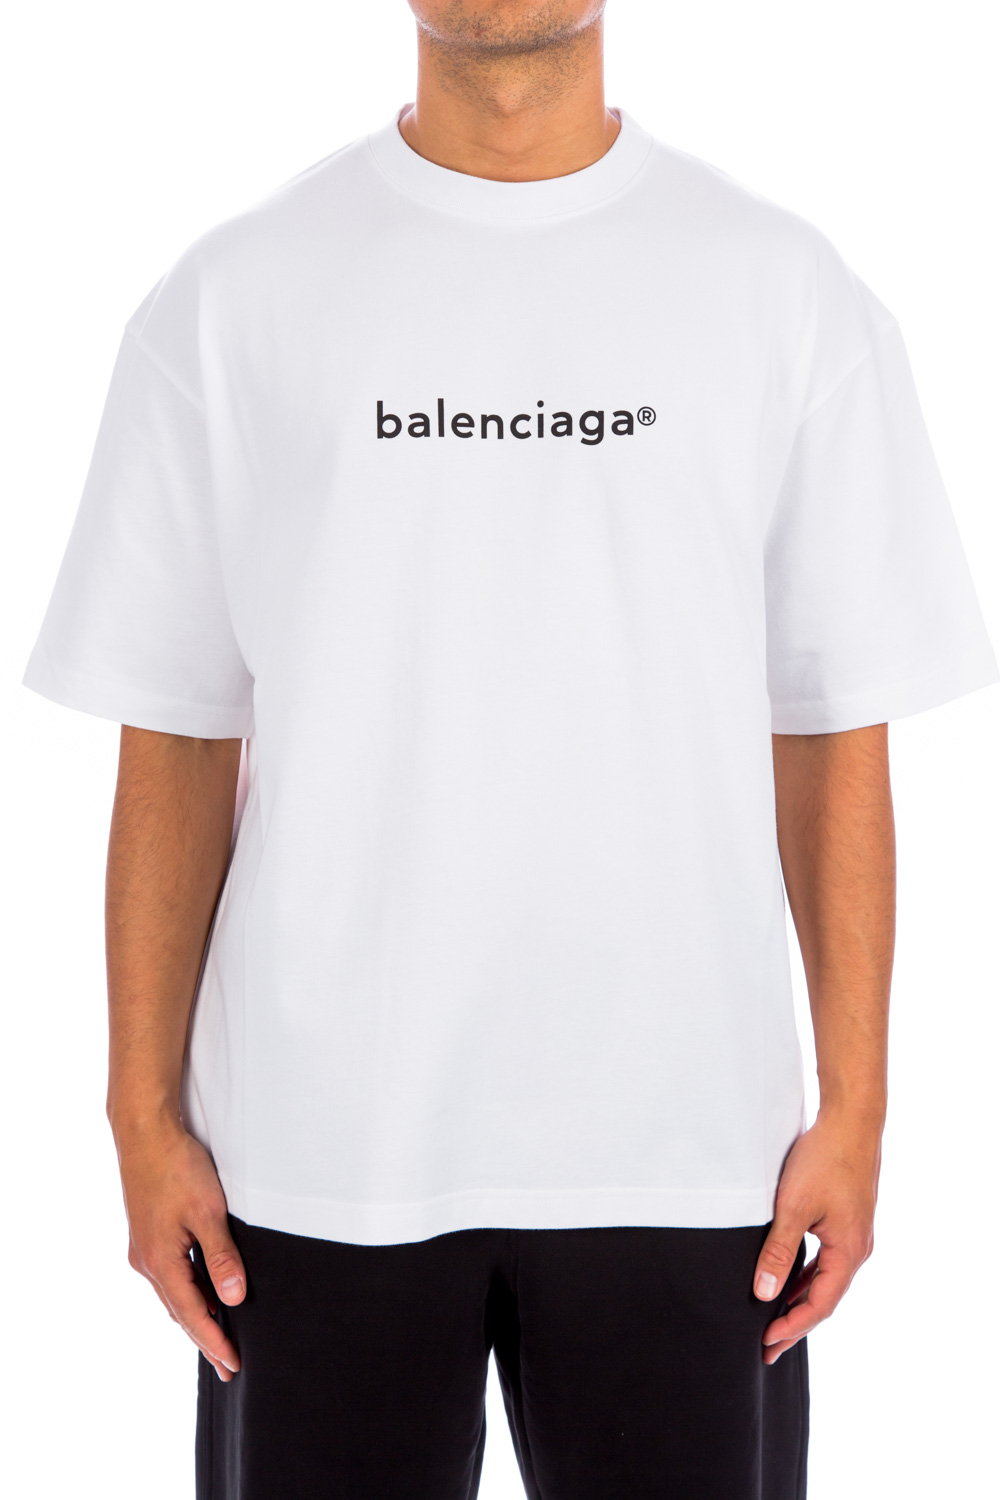 Balenciaga T Shirt Herren / BALENCIAGA Crew Oversized T Shirt | Cruise ...